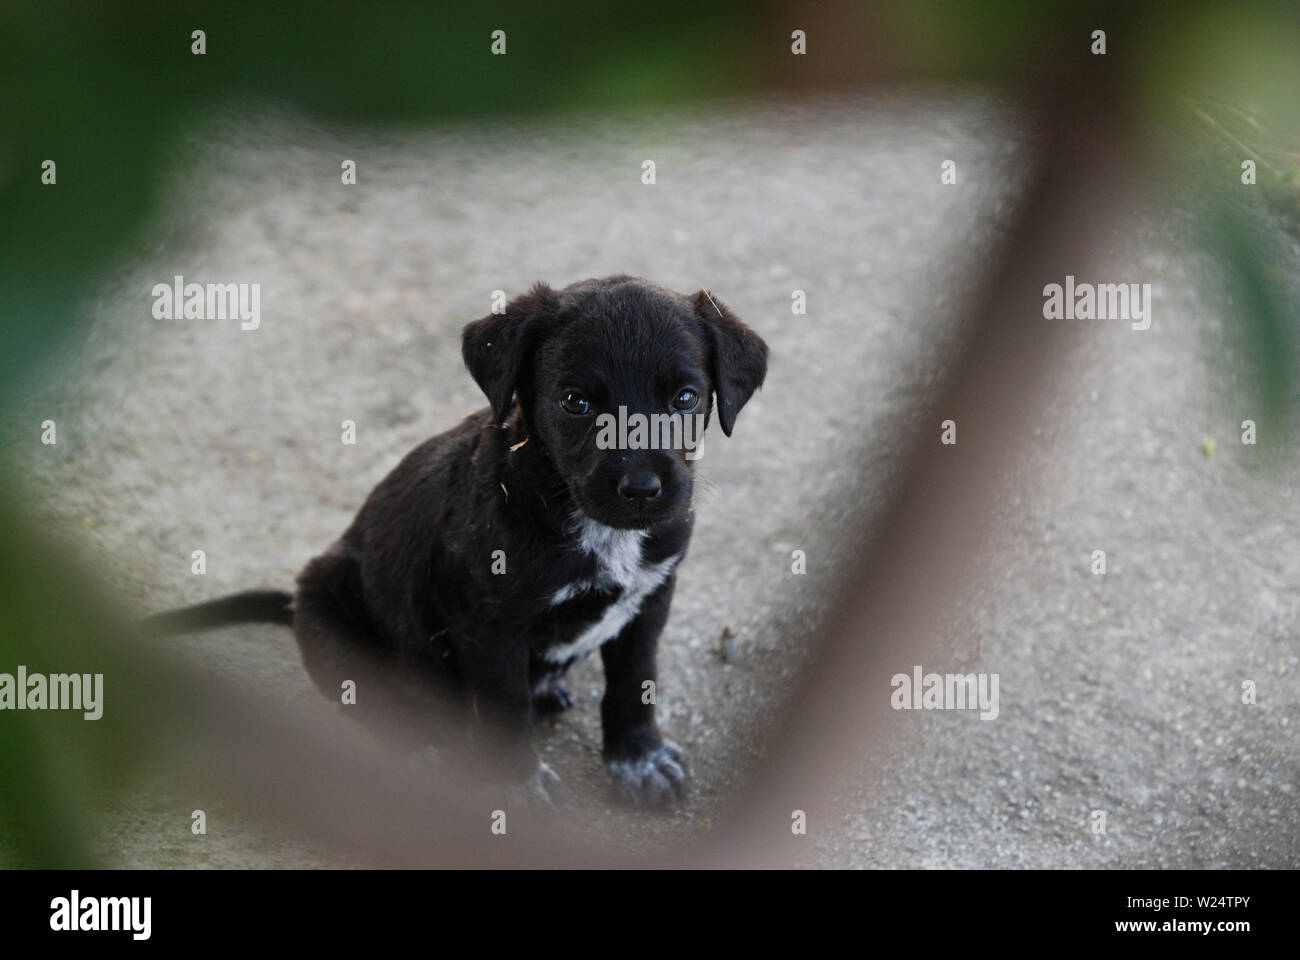 Awaiting adoption hi-res stock photography and images - Alamy